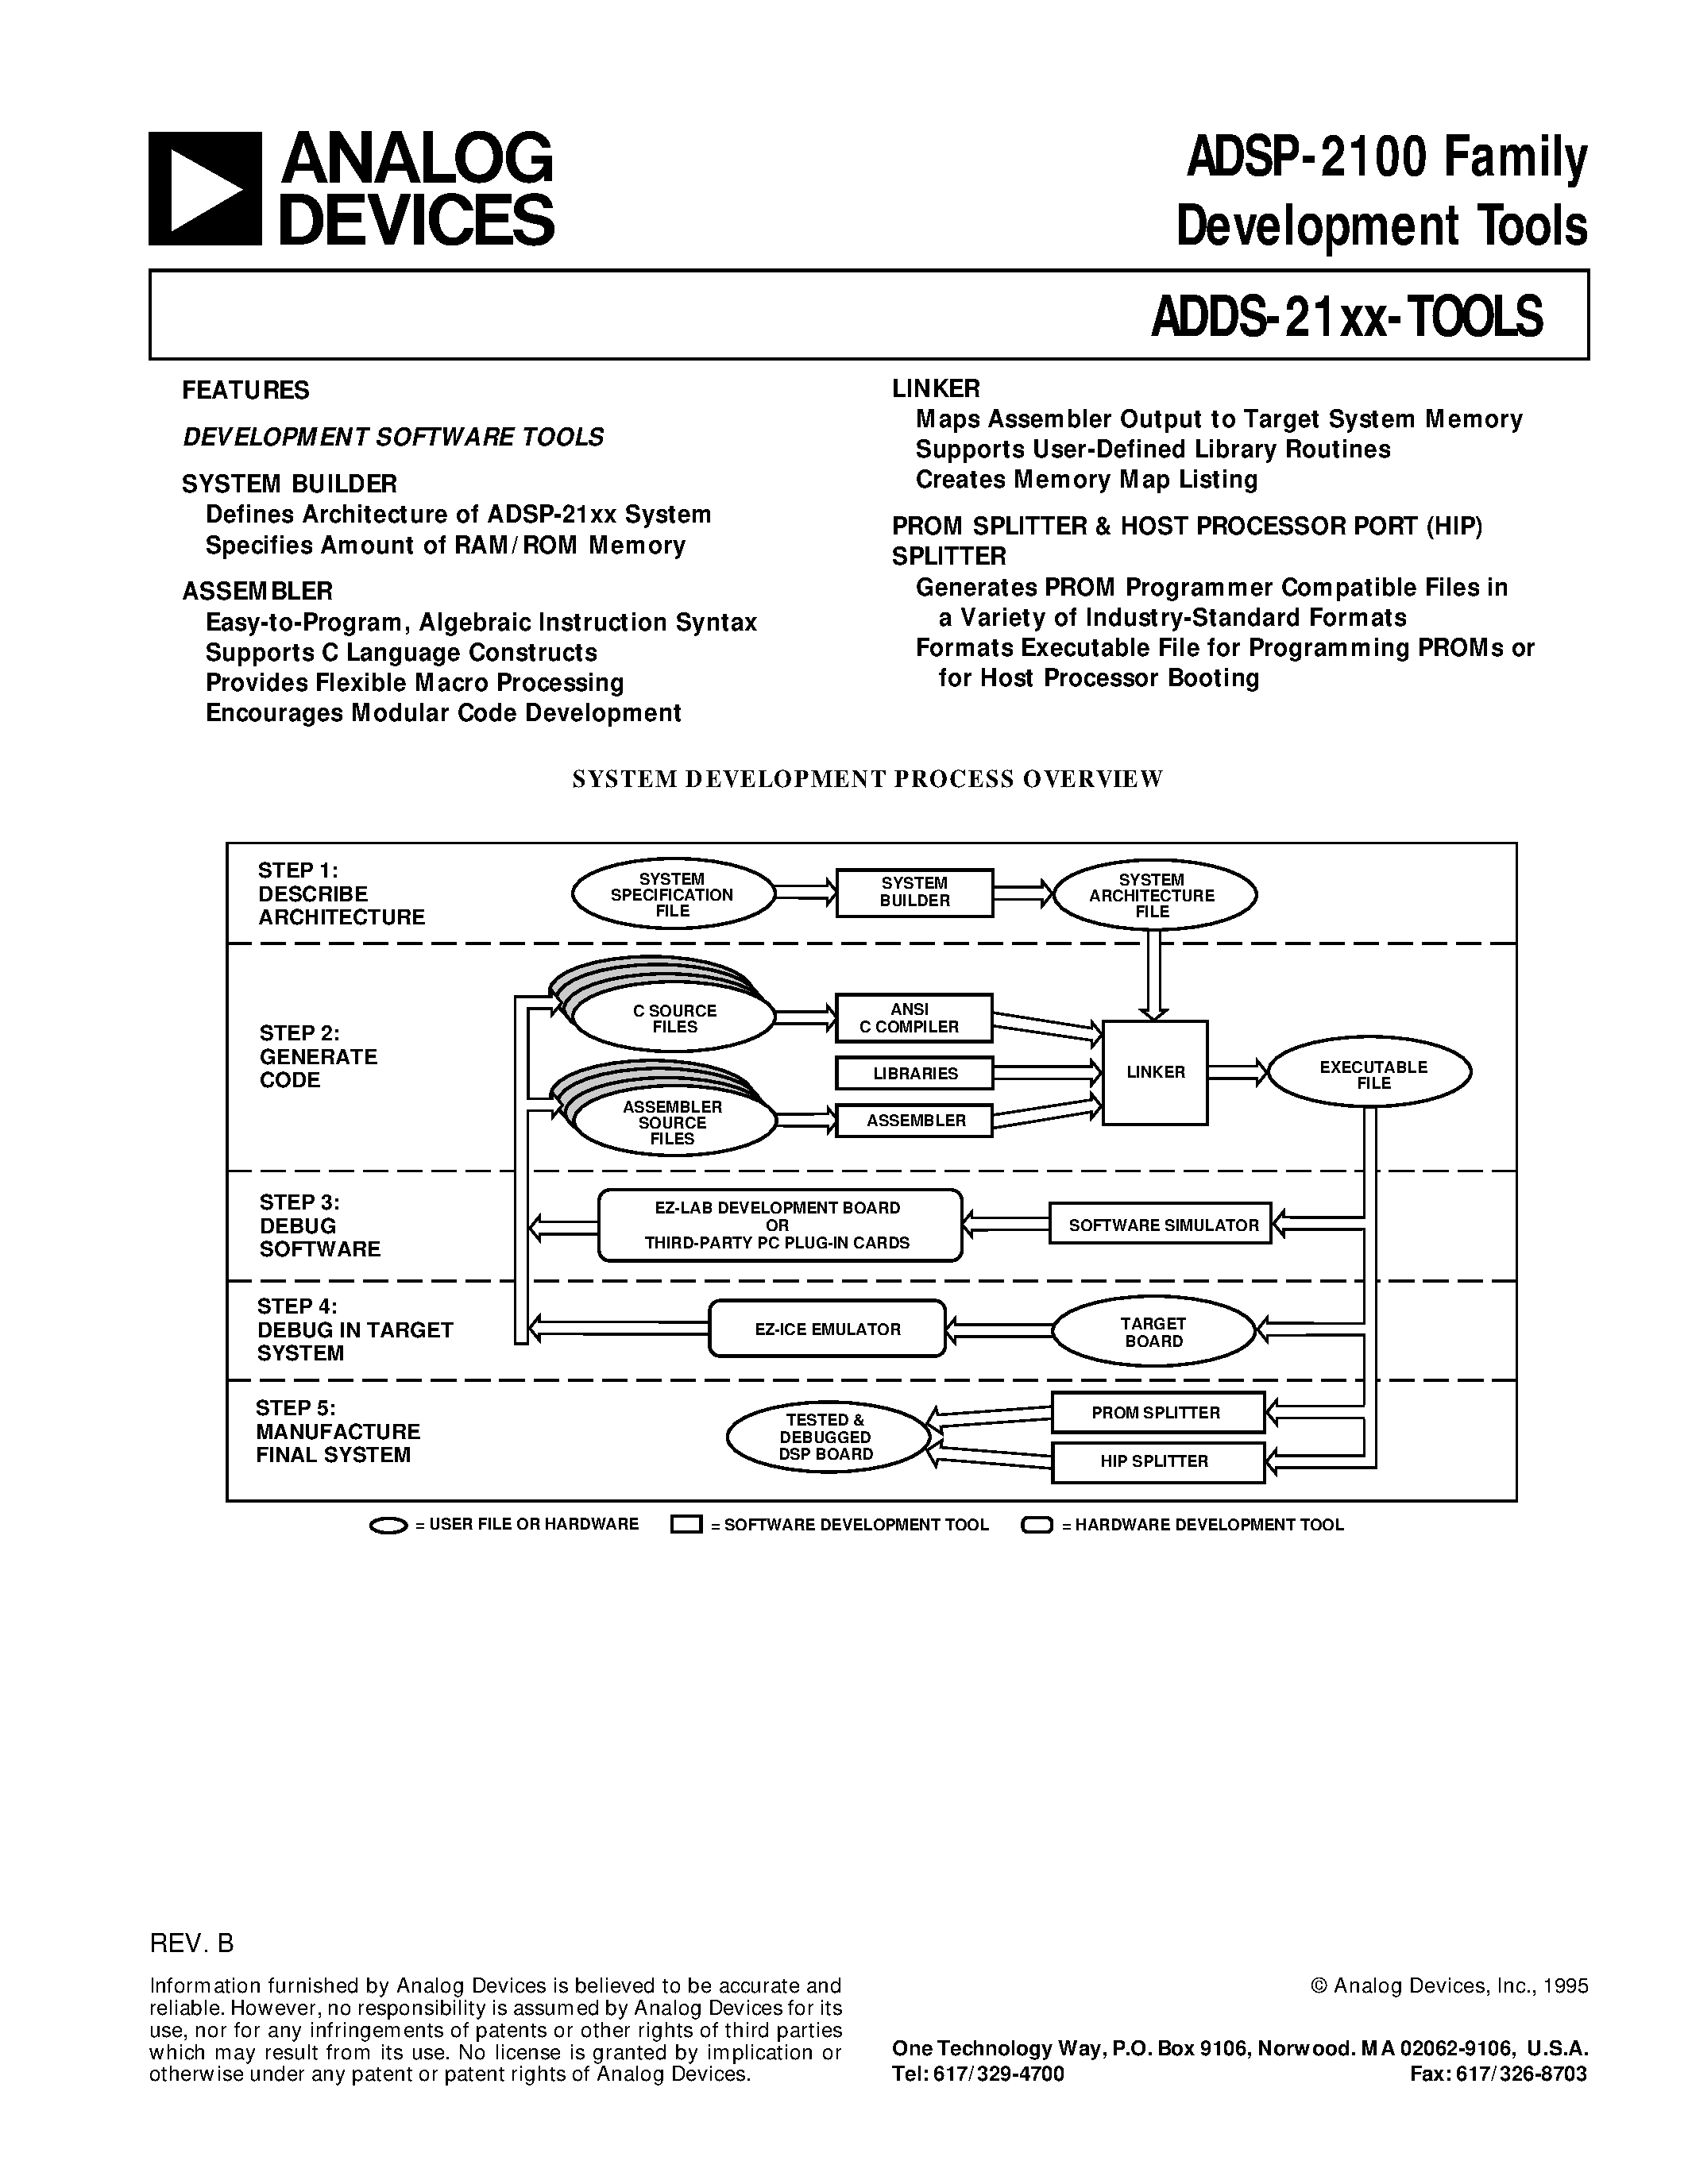 Datasheet ADDS-2111-EZ-KIT - ADSP-2100 Family Development Tools page 1